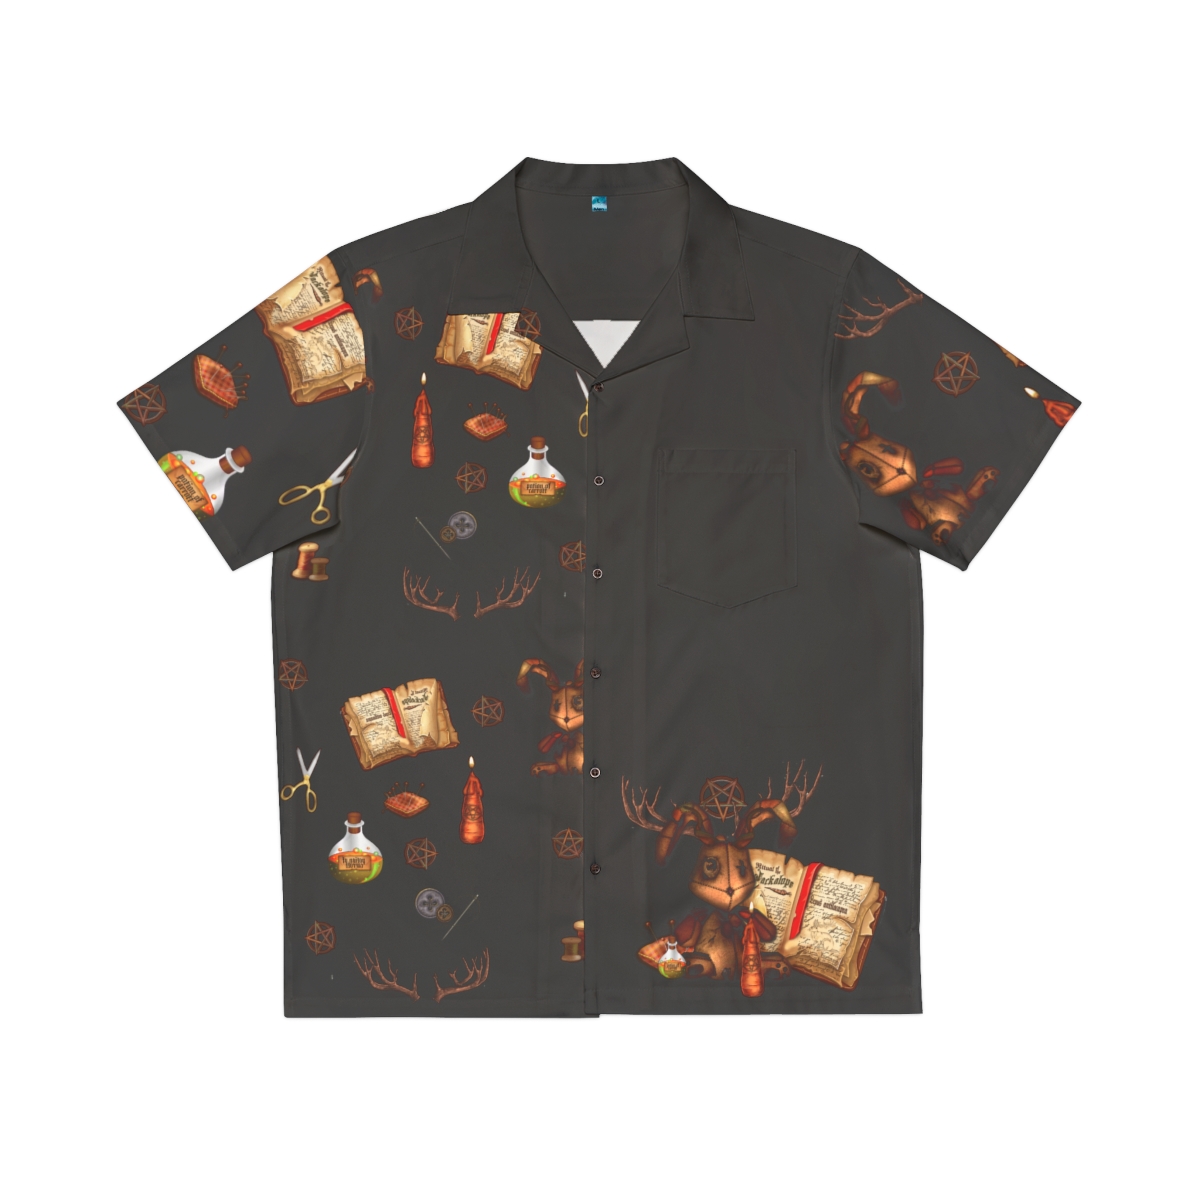 "The Jackalope Ritual" Men's Hawaiian Shirt product thumbnail image